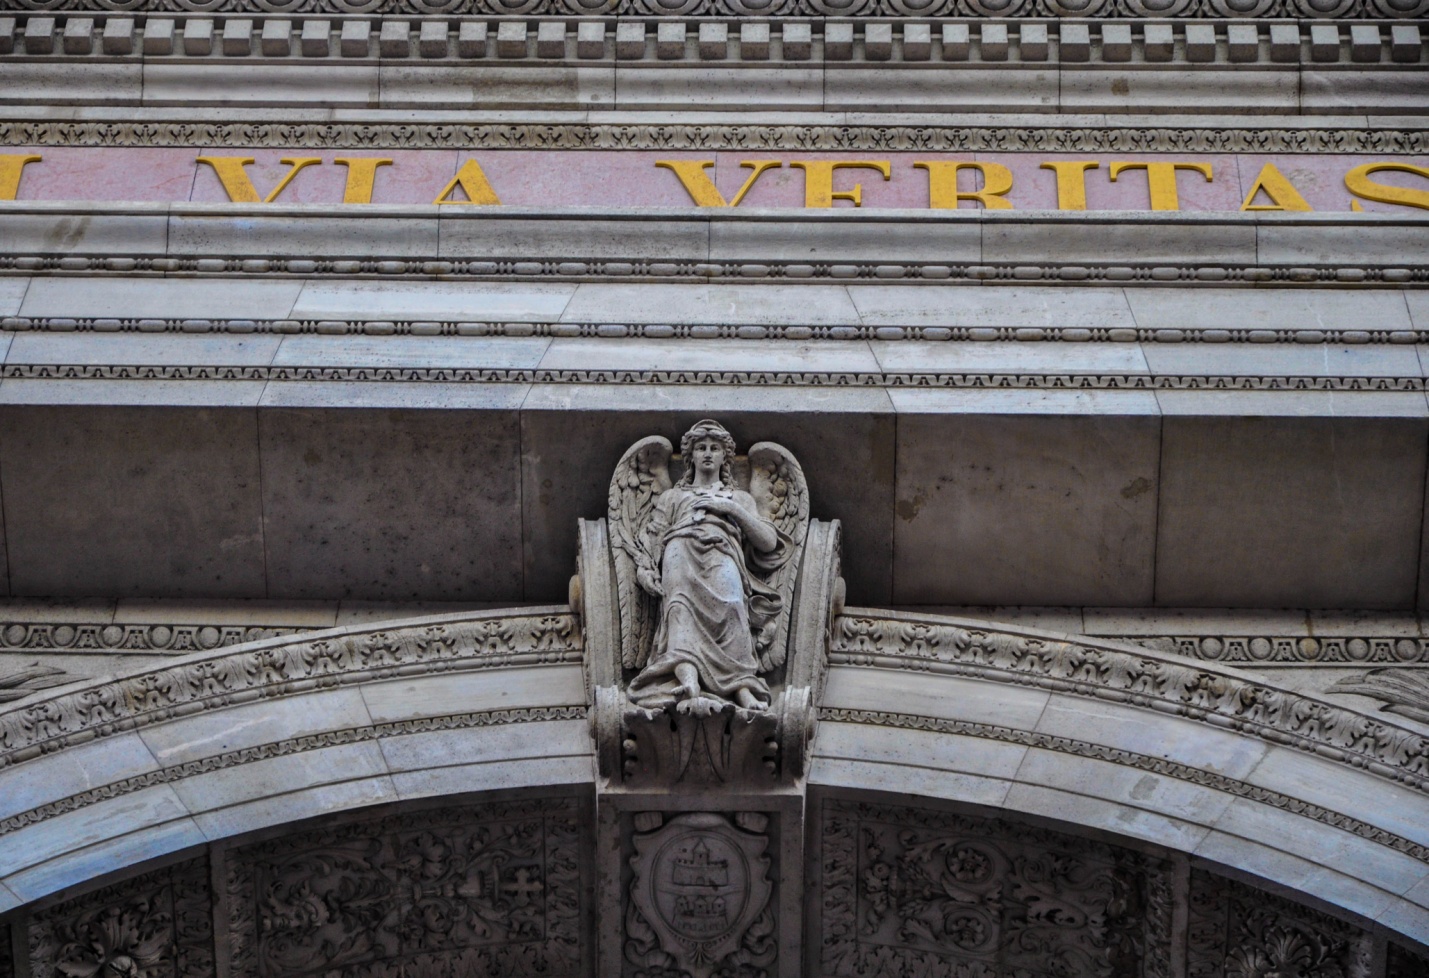 Базилика Святого Иштвана — католический собор в стиле неоренессанс, крупнейший храм Будапешта